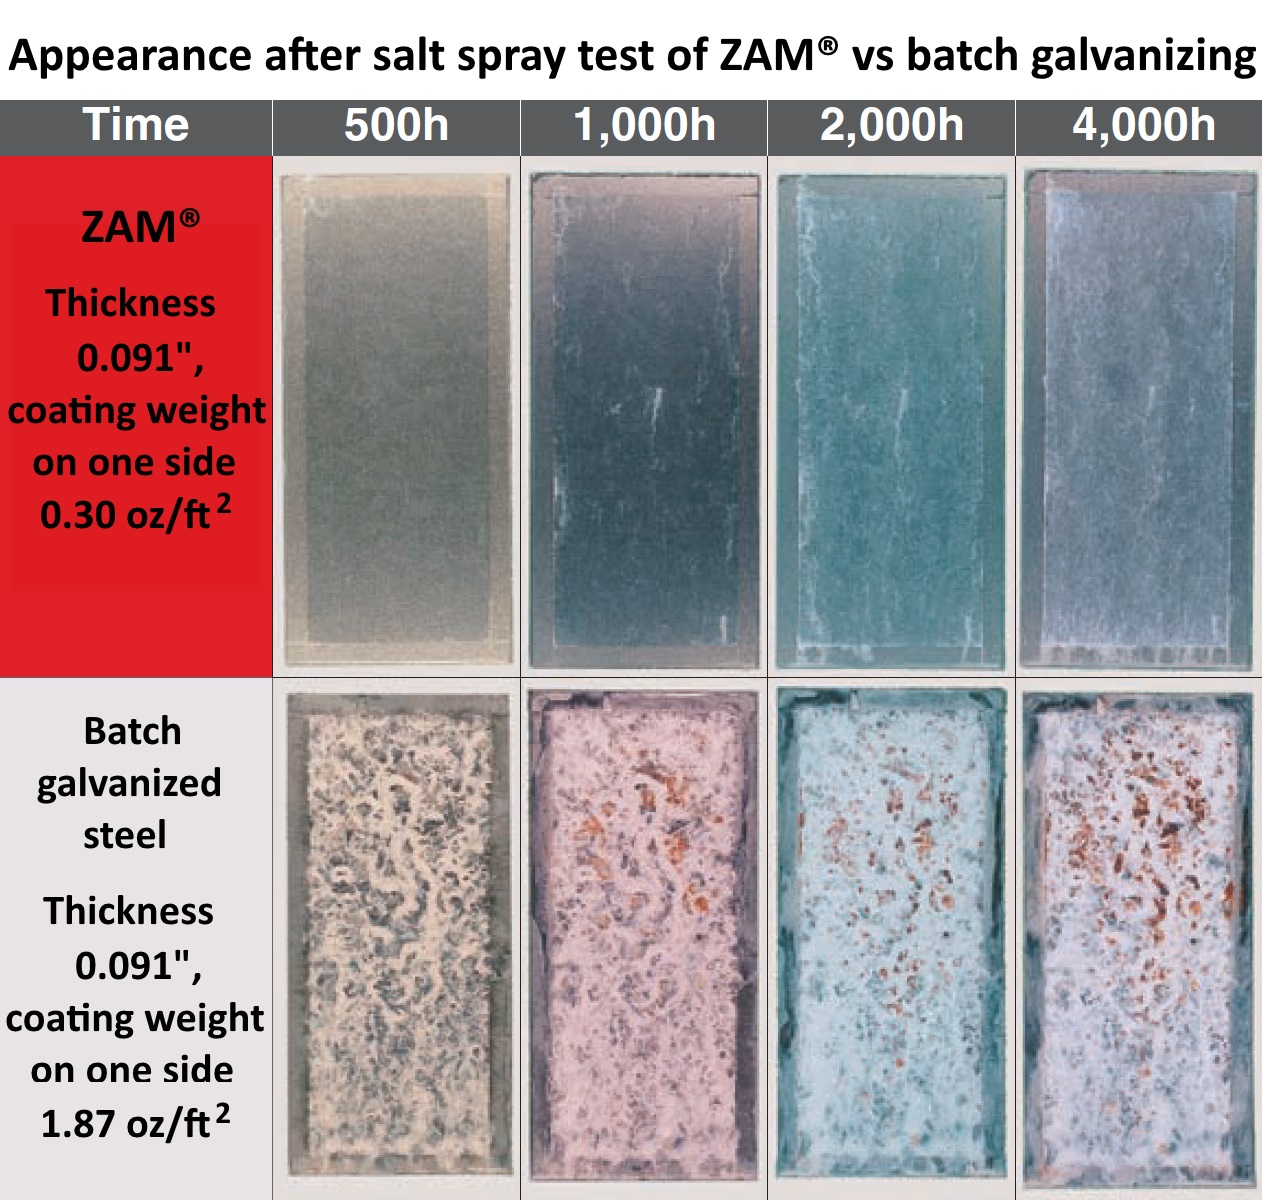 Comparison photos showing superior corrosion of ZAM® vs batch galvanizing after salt spray test